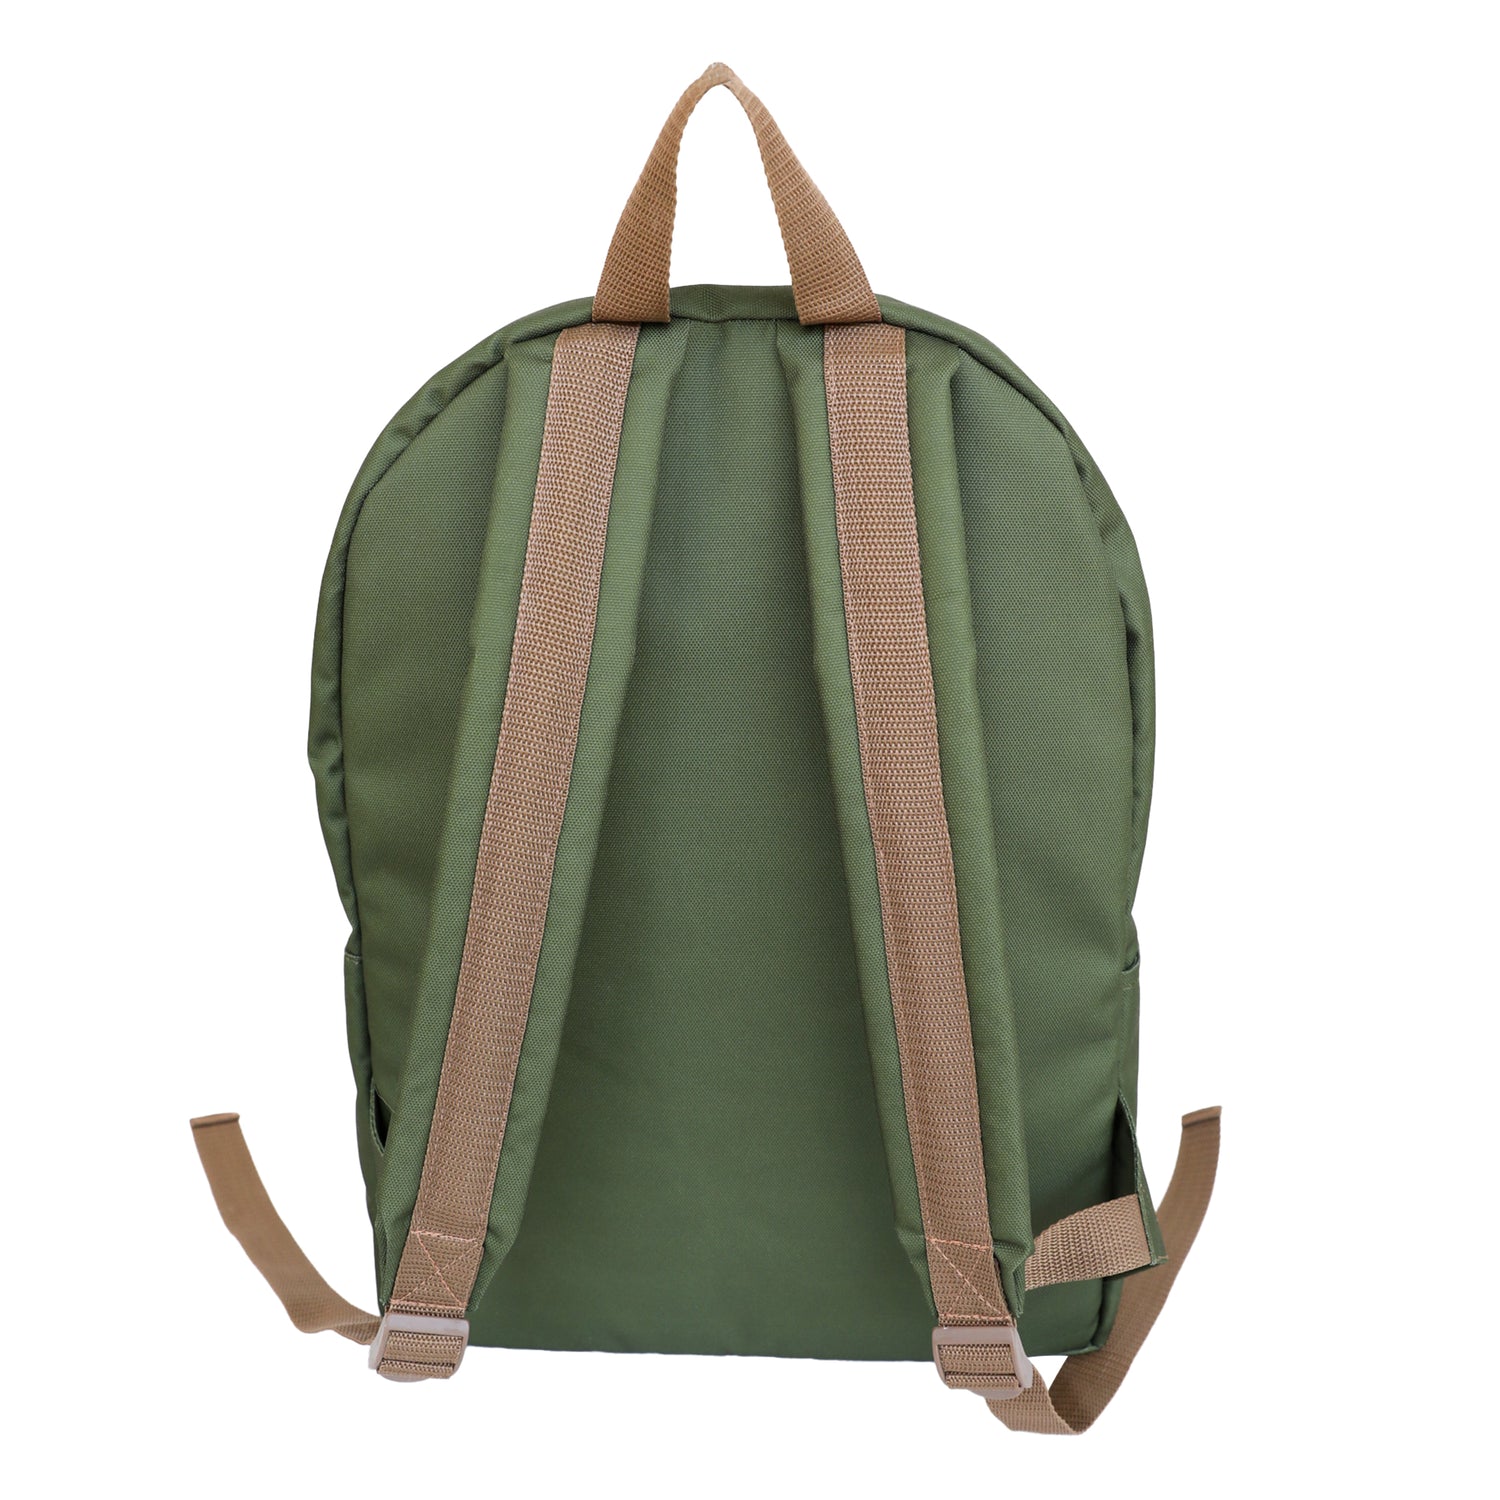 mochila clasica escolar sustentable verde botela